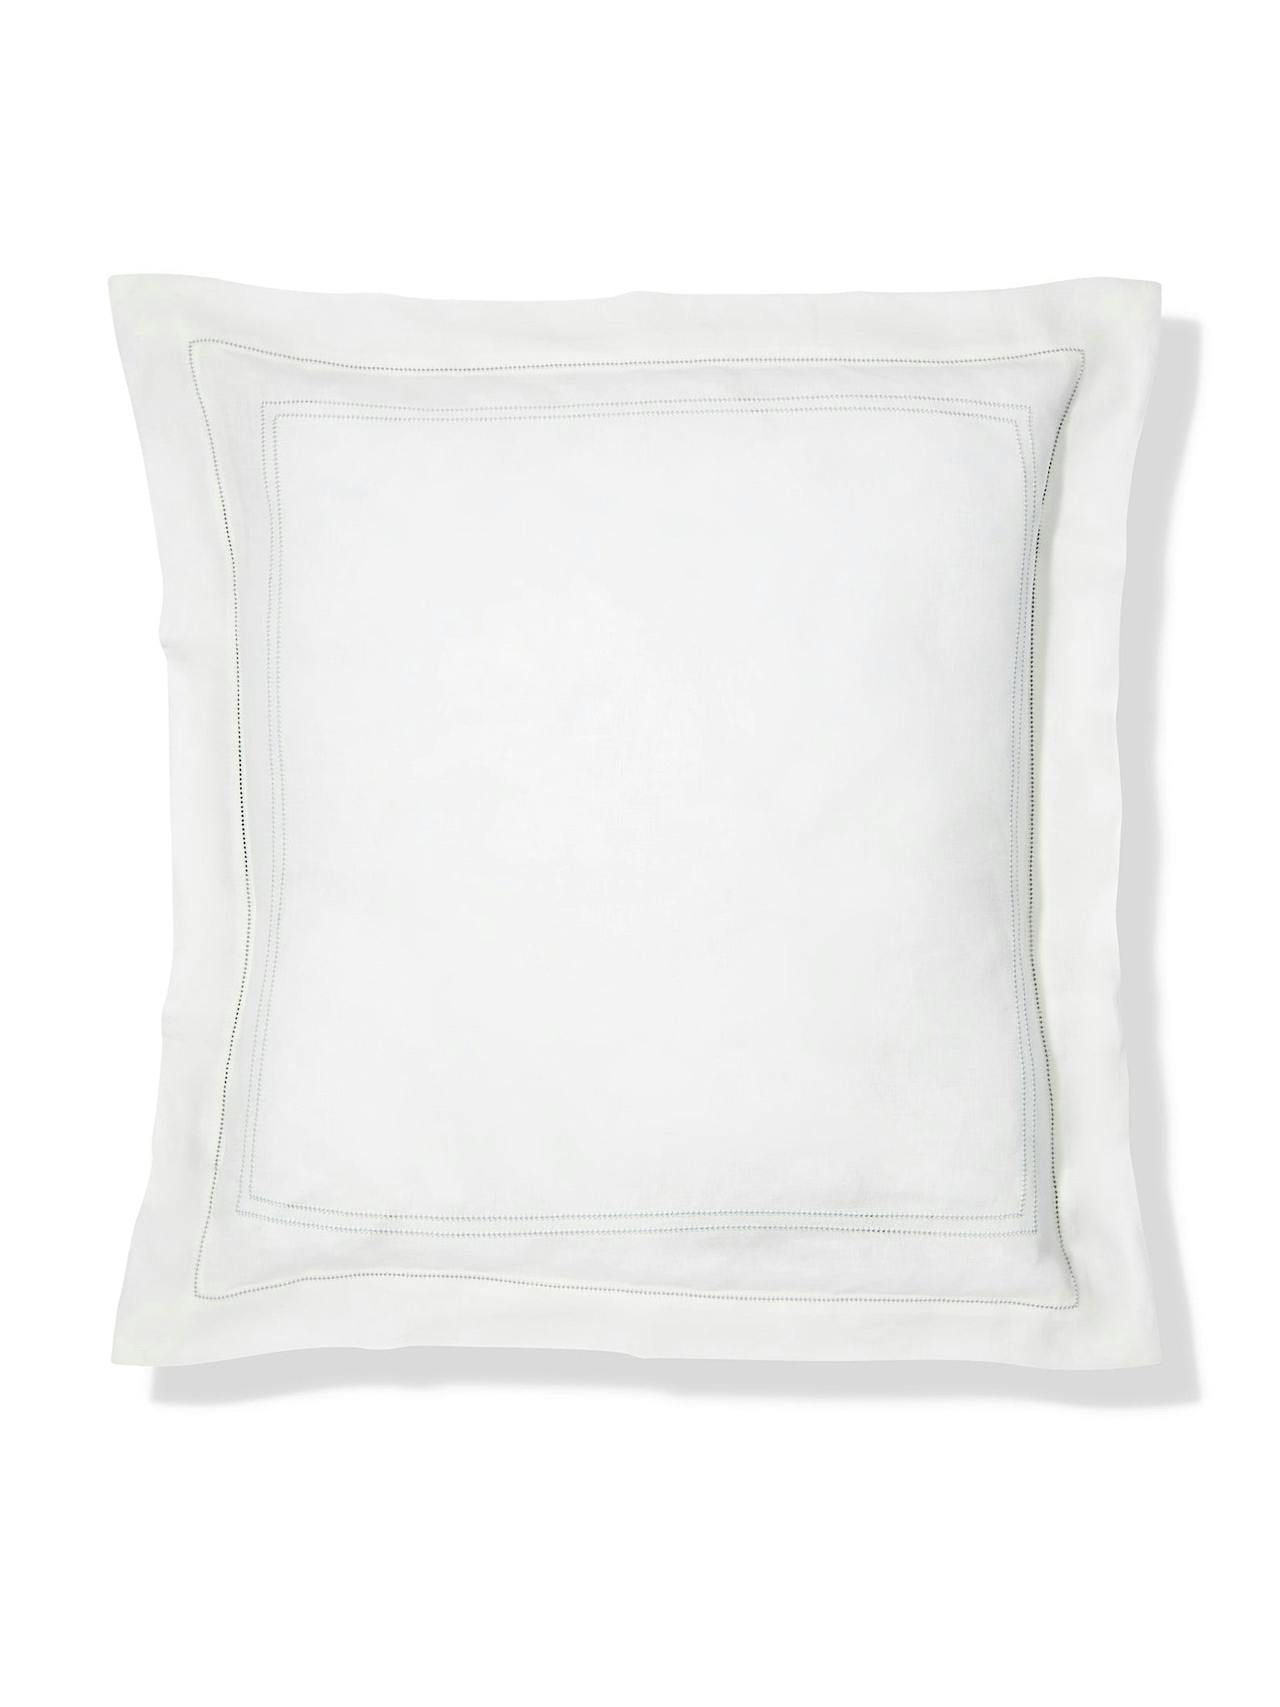 Parma grey hemstitch pillowcase